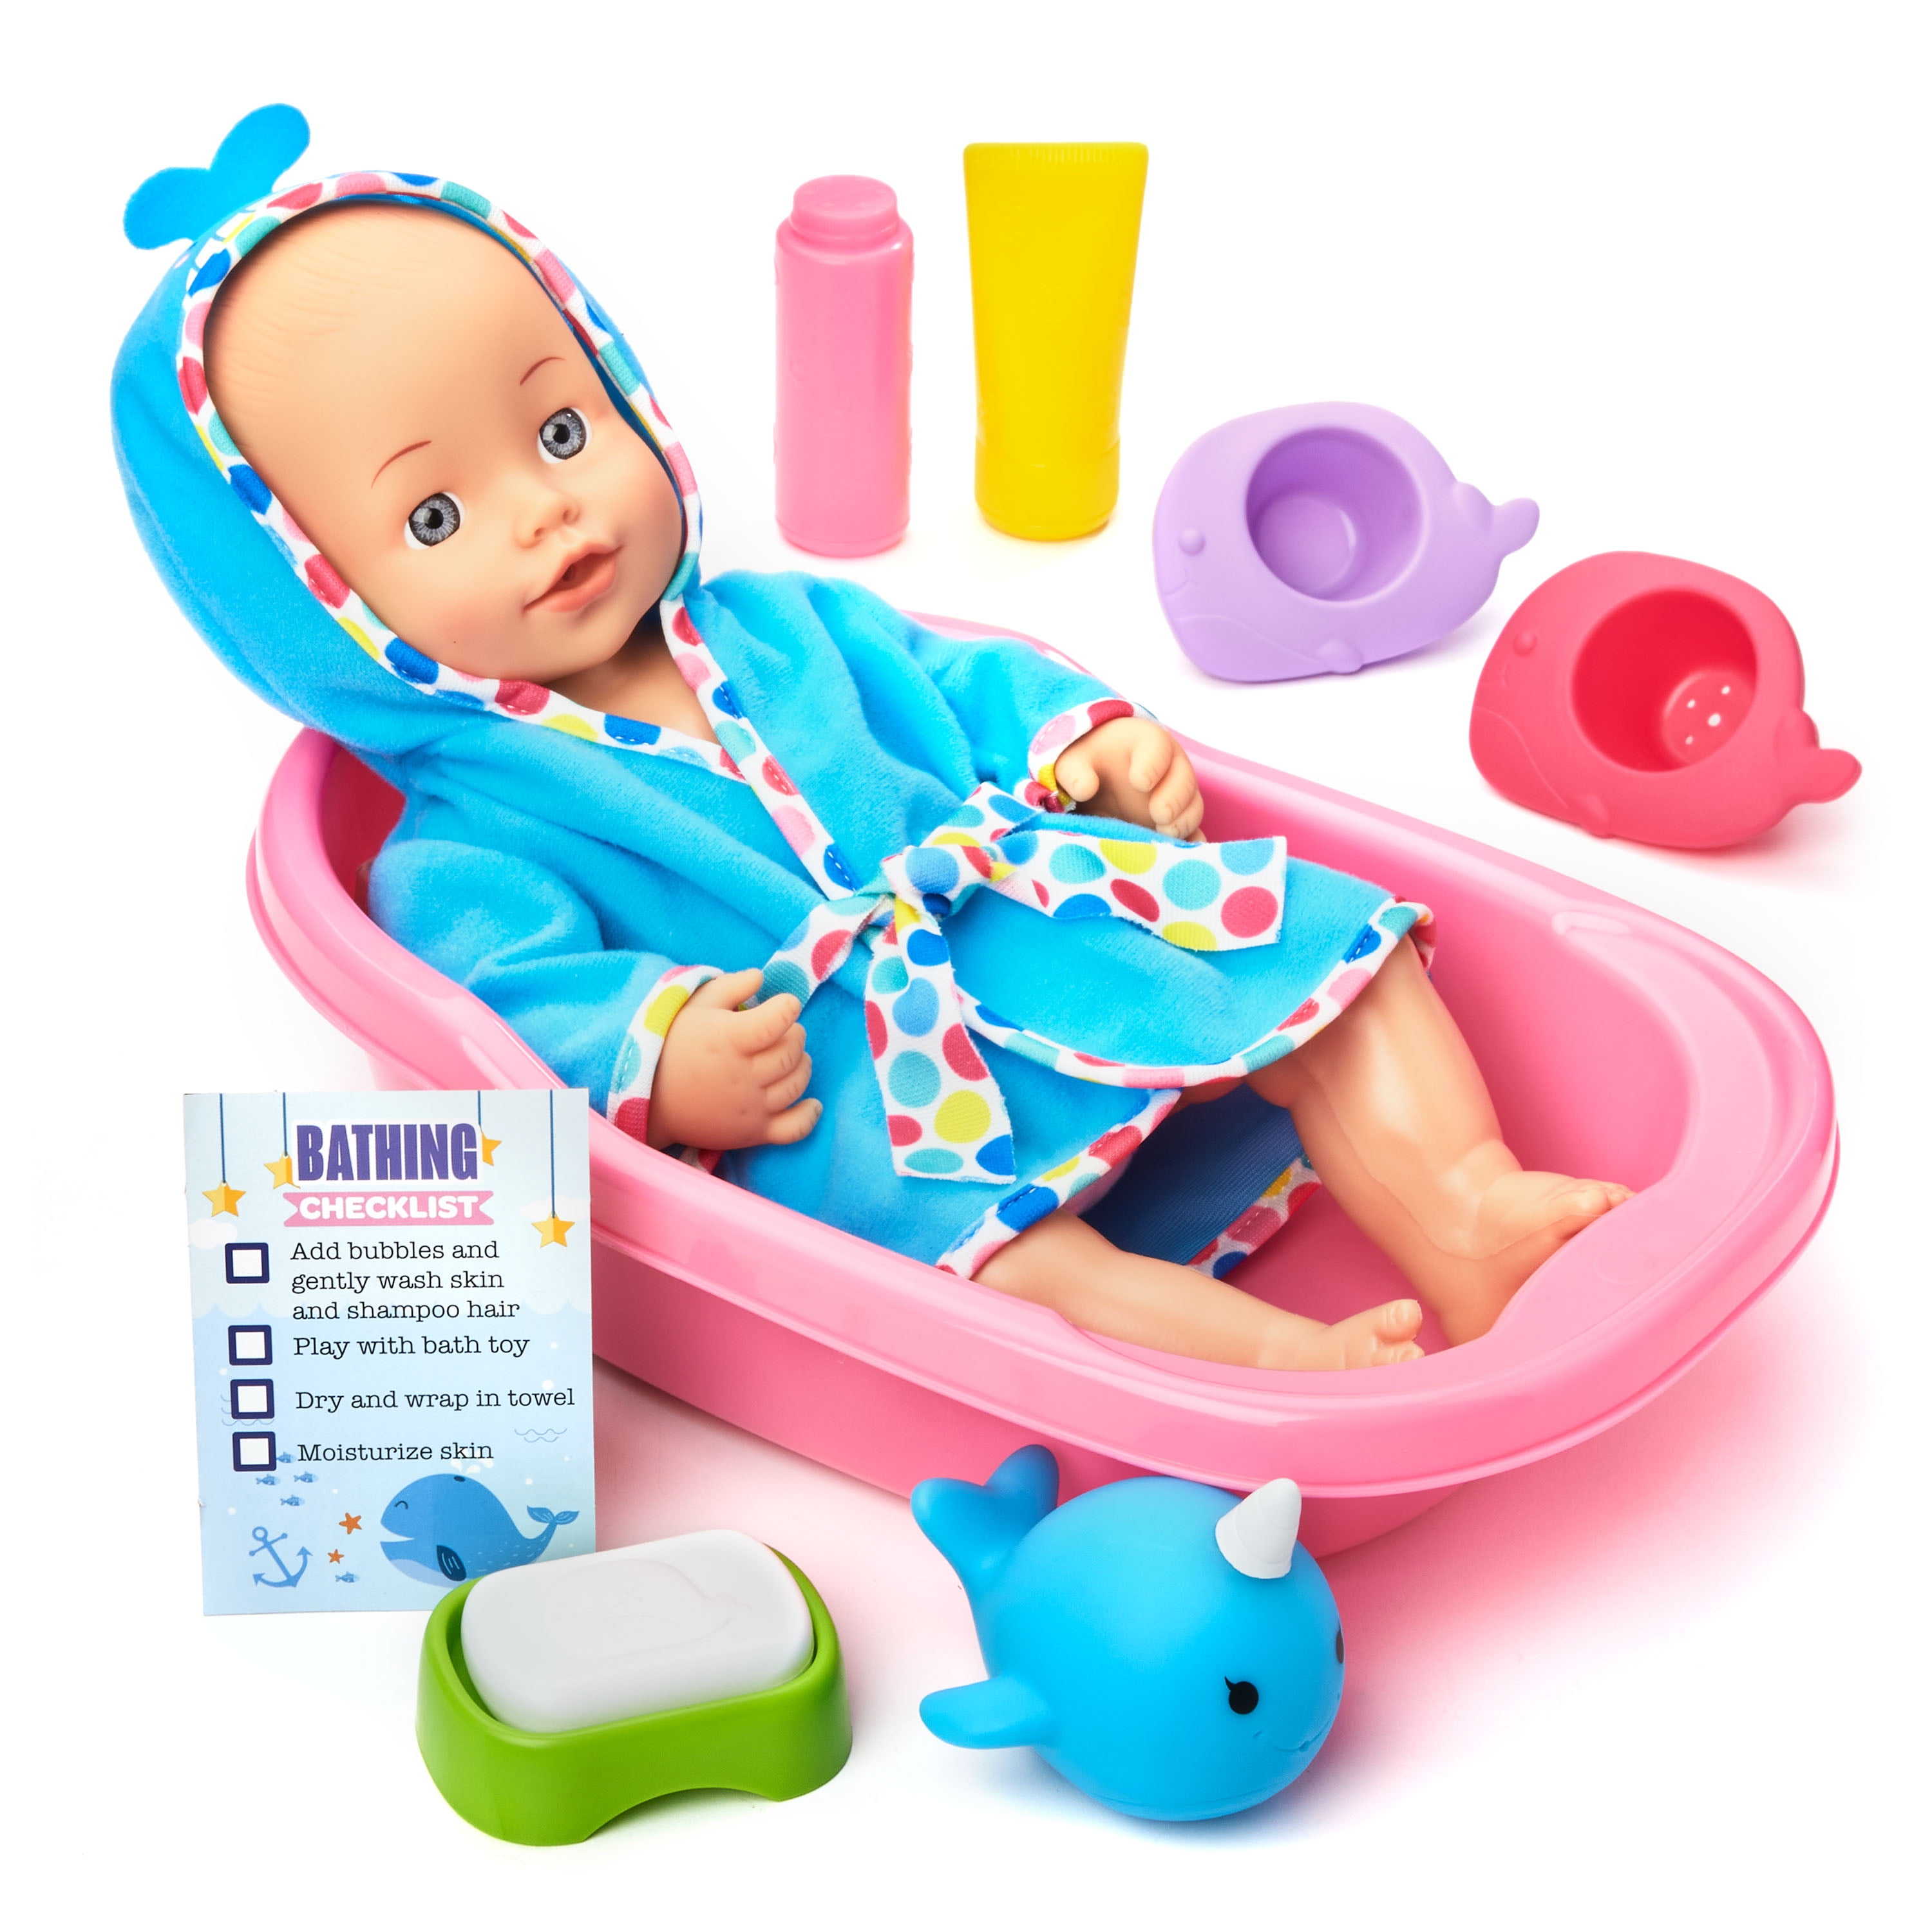 Details about   Baby Dolls Play Toy Bath Tub Bath Time Kids Pretend Parent Washing Toy Kid Good 